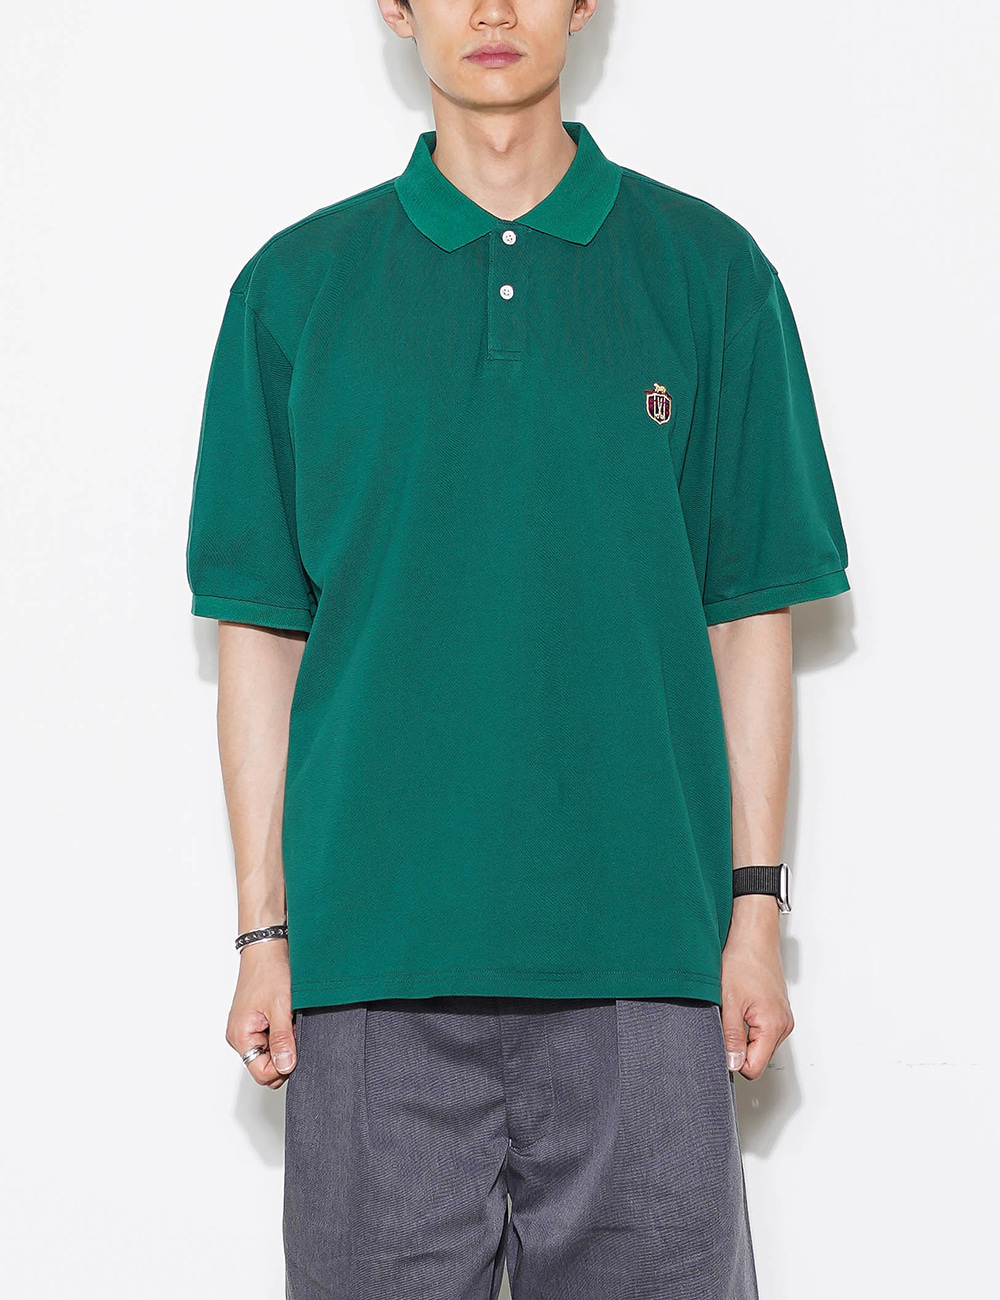 CRST Pocket T-Shirts (Green)